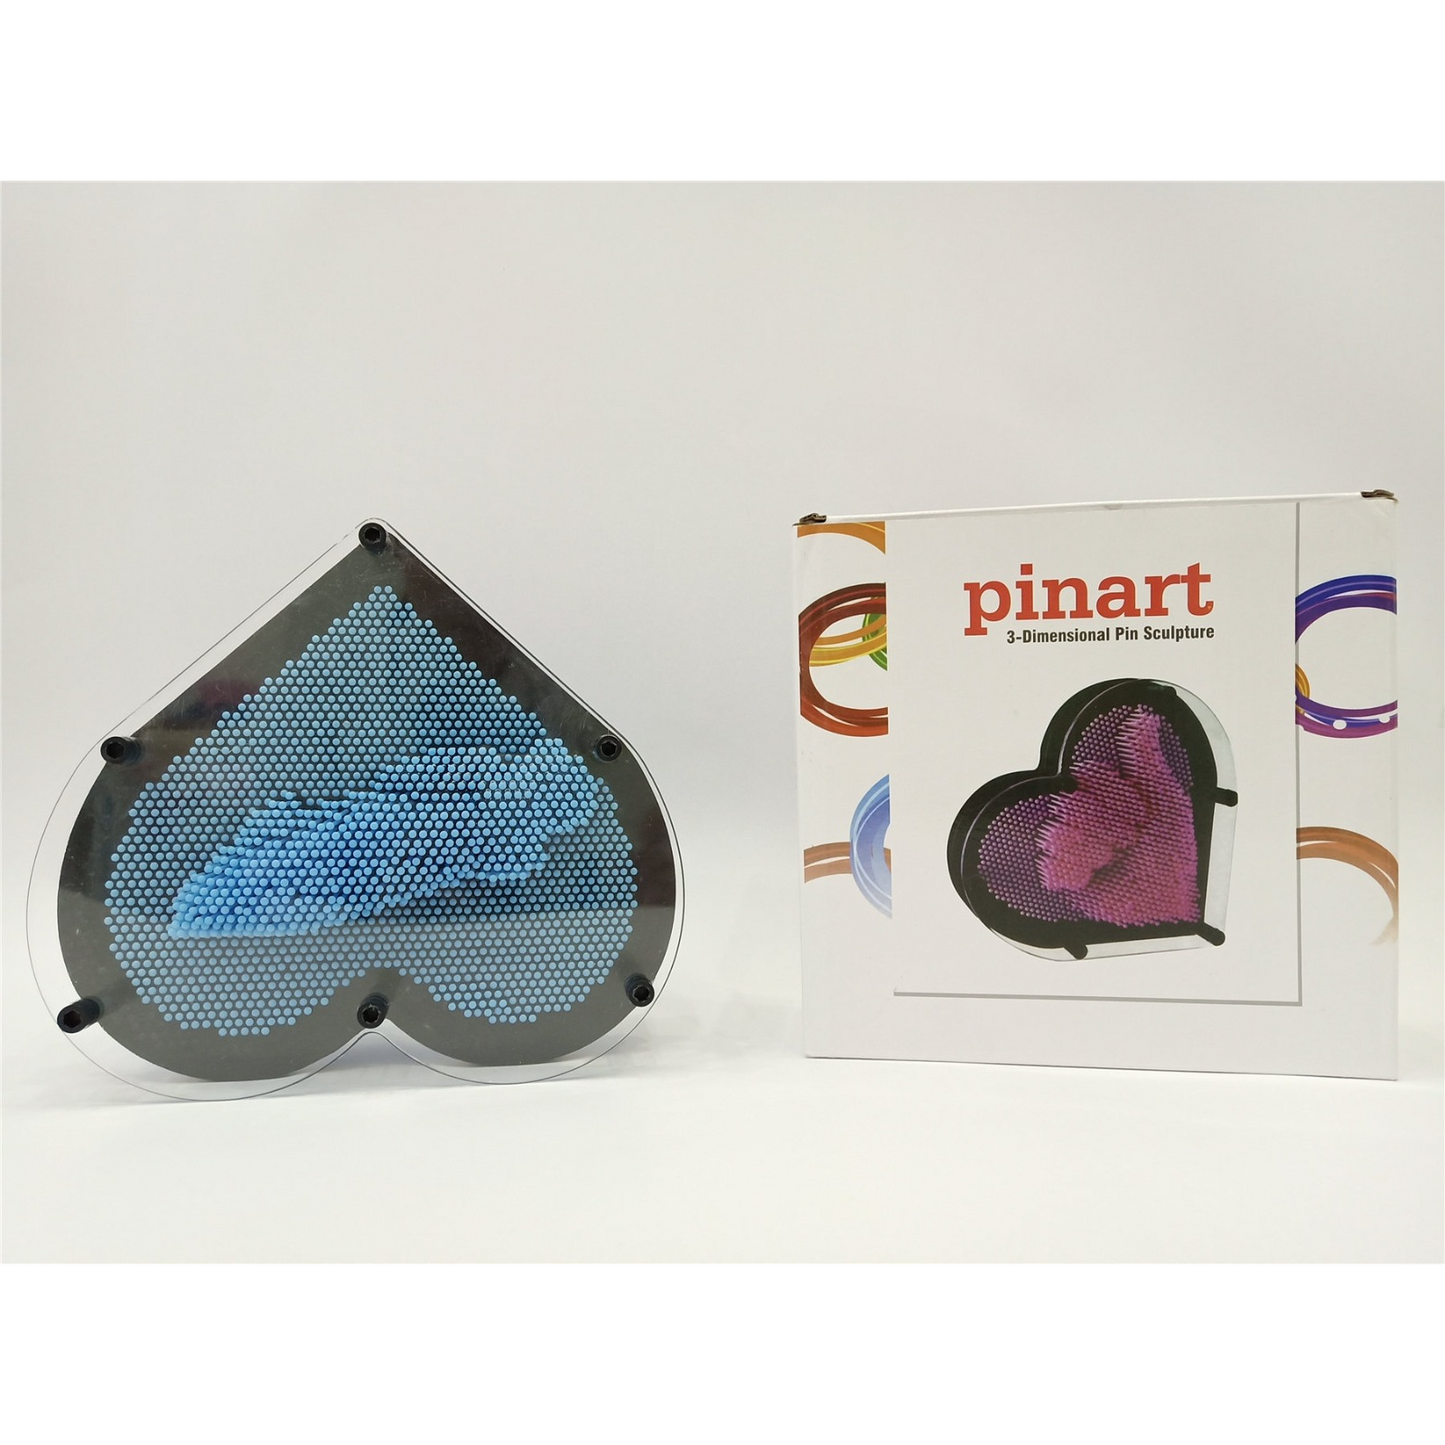 Pinart | 3-Dimensional Pin Sculpture